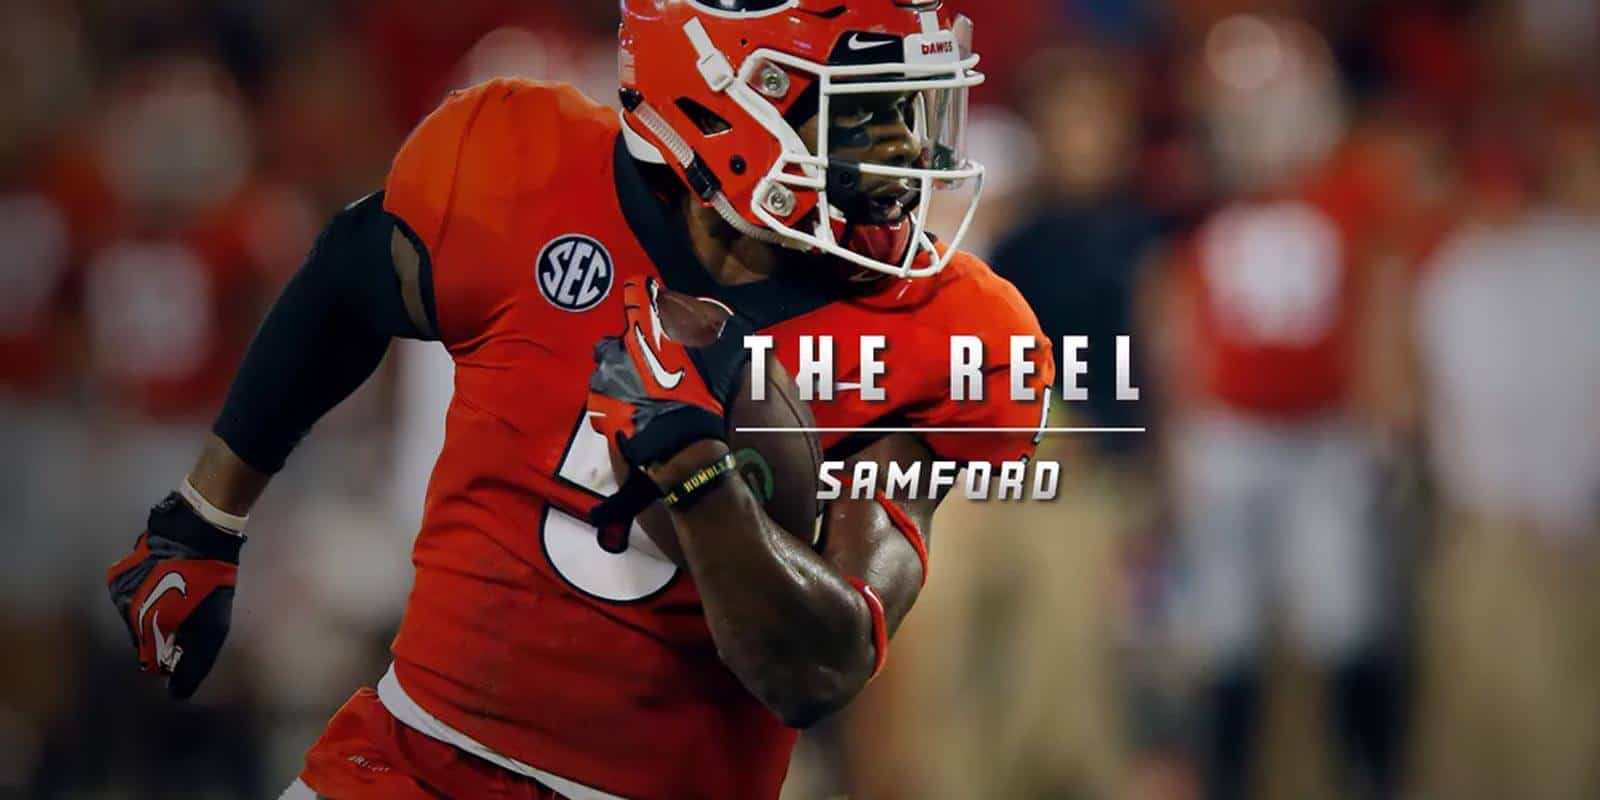 The Reel: Samford